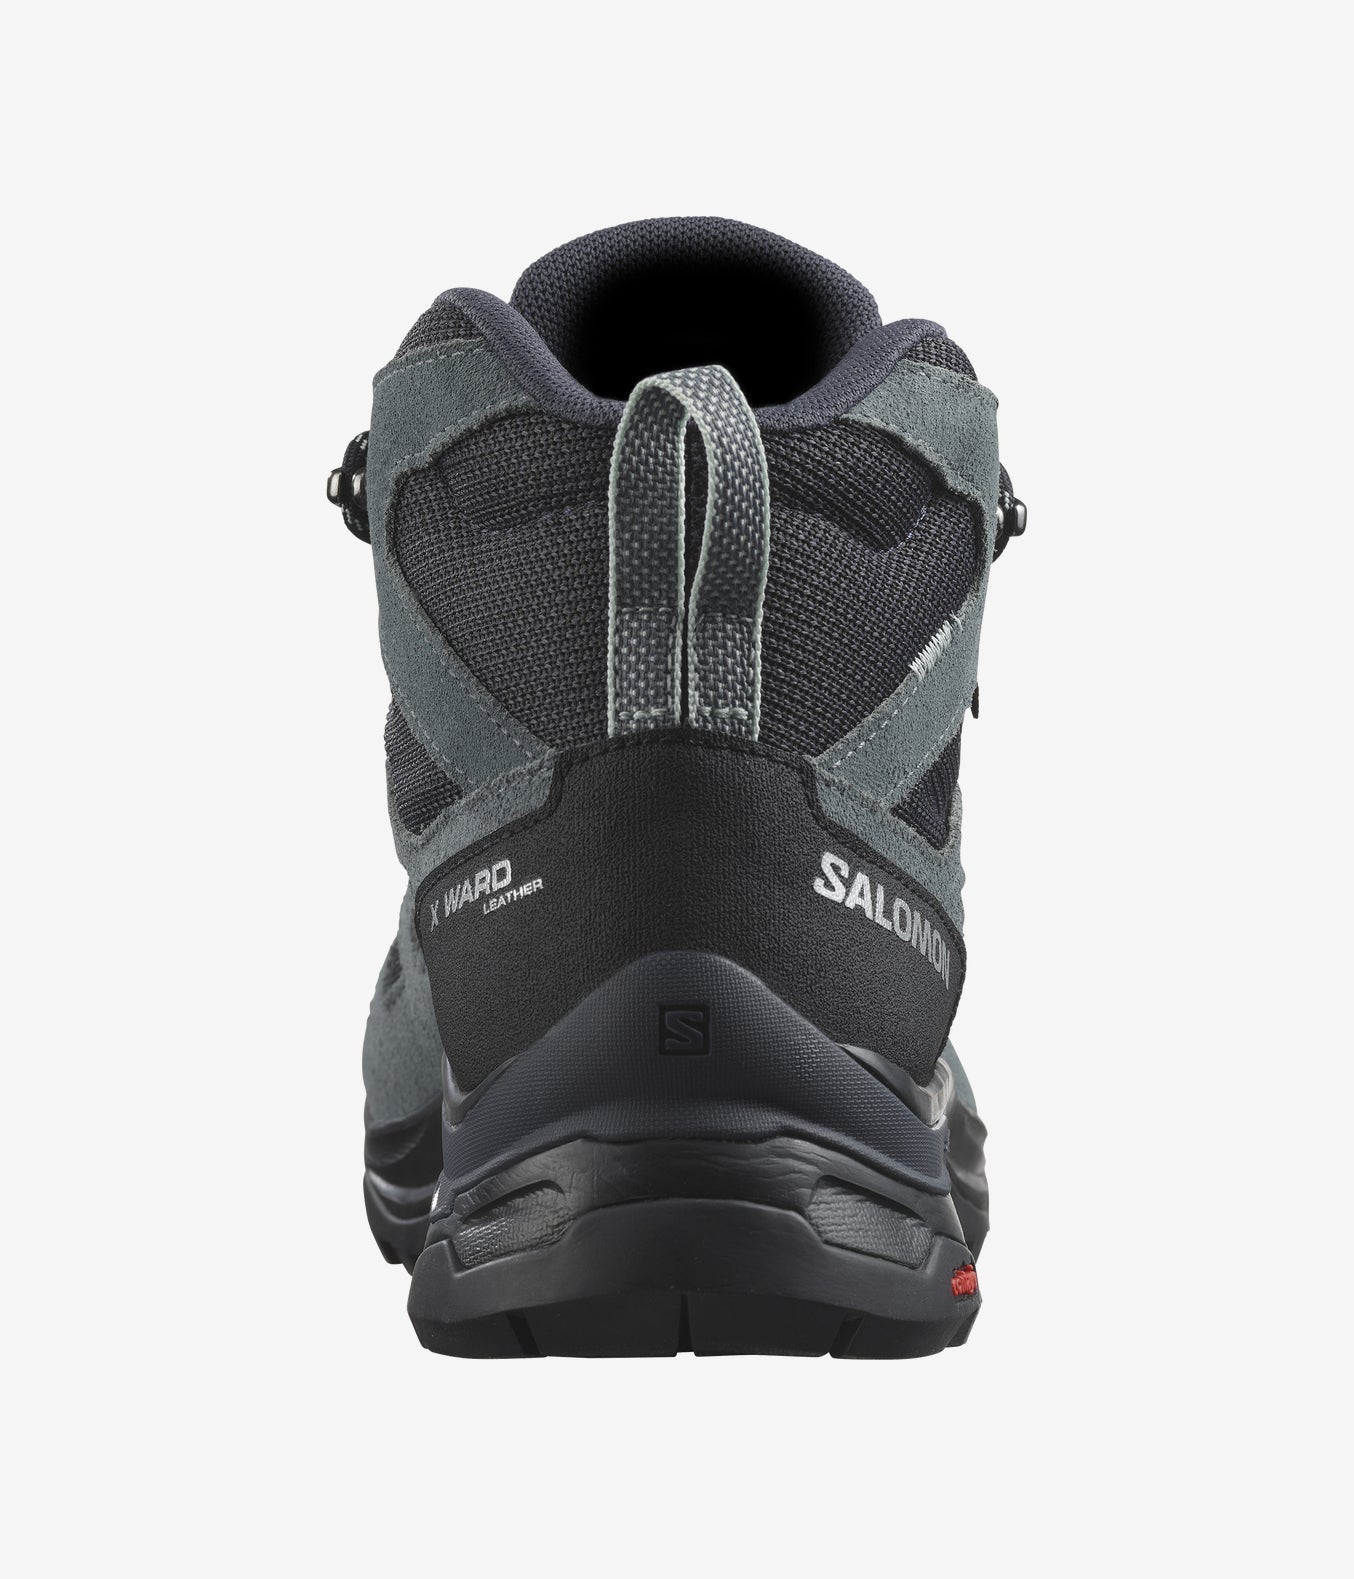 Salomon Gore-Tex Mid-Cut Trekking Shoes - Waterproof, Durable Hiking Boots for Men